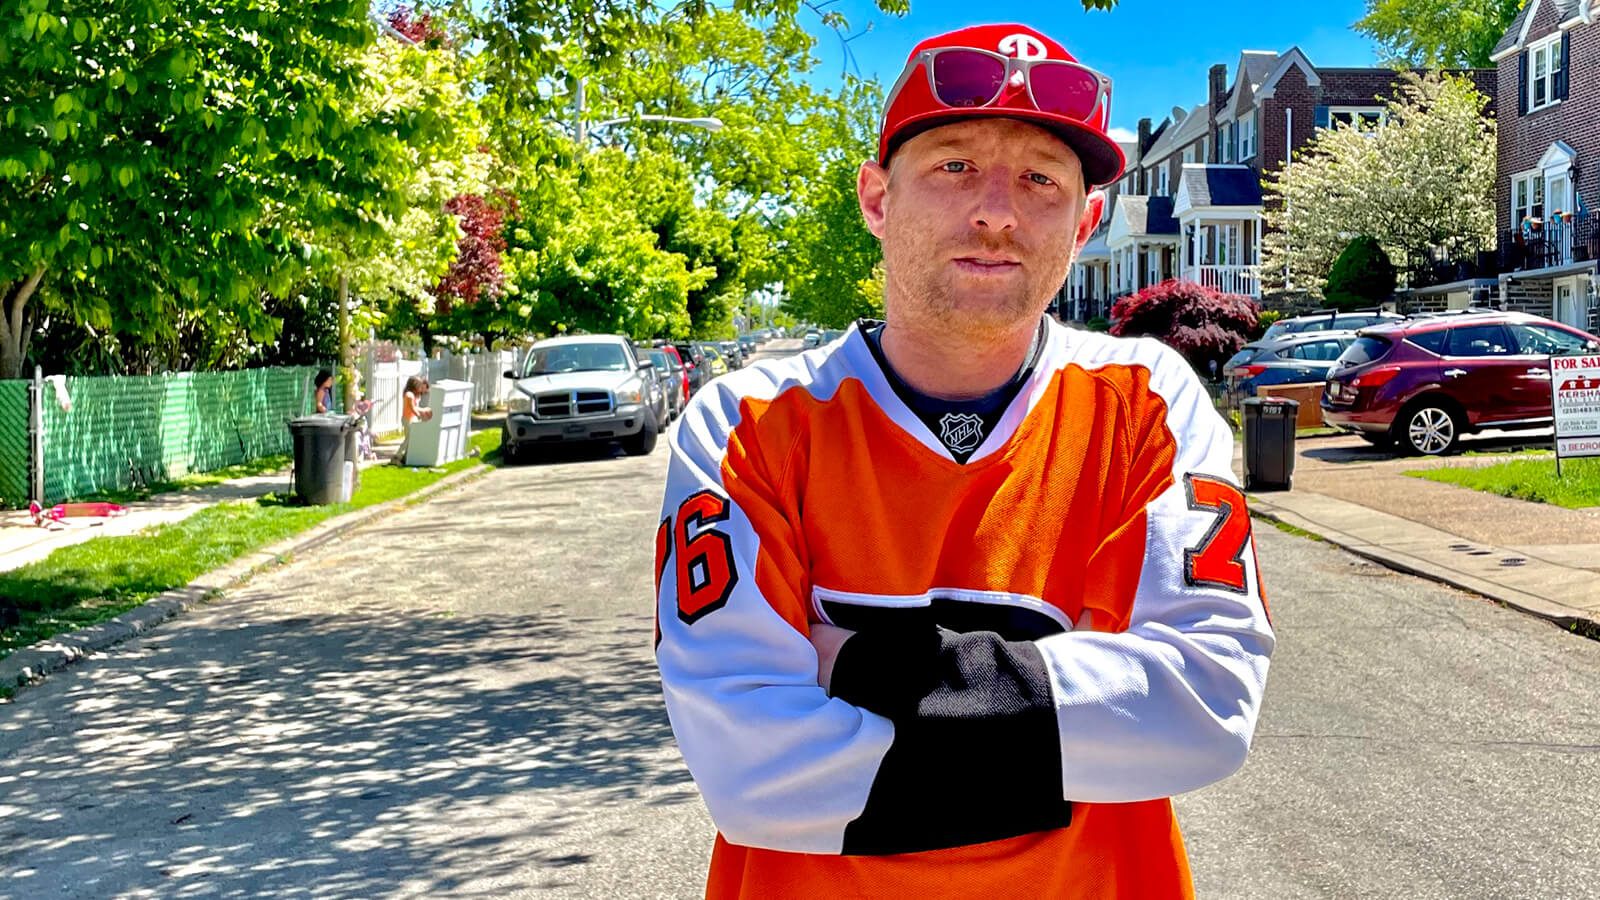 Full Sail Film Production MFA grad Panda Lord in an orange hockey jersey on a residential Philadelphia street.